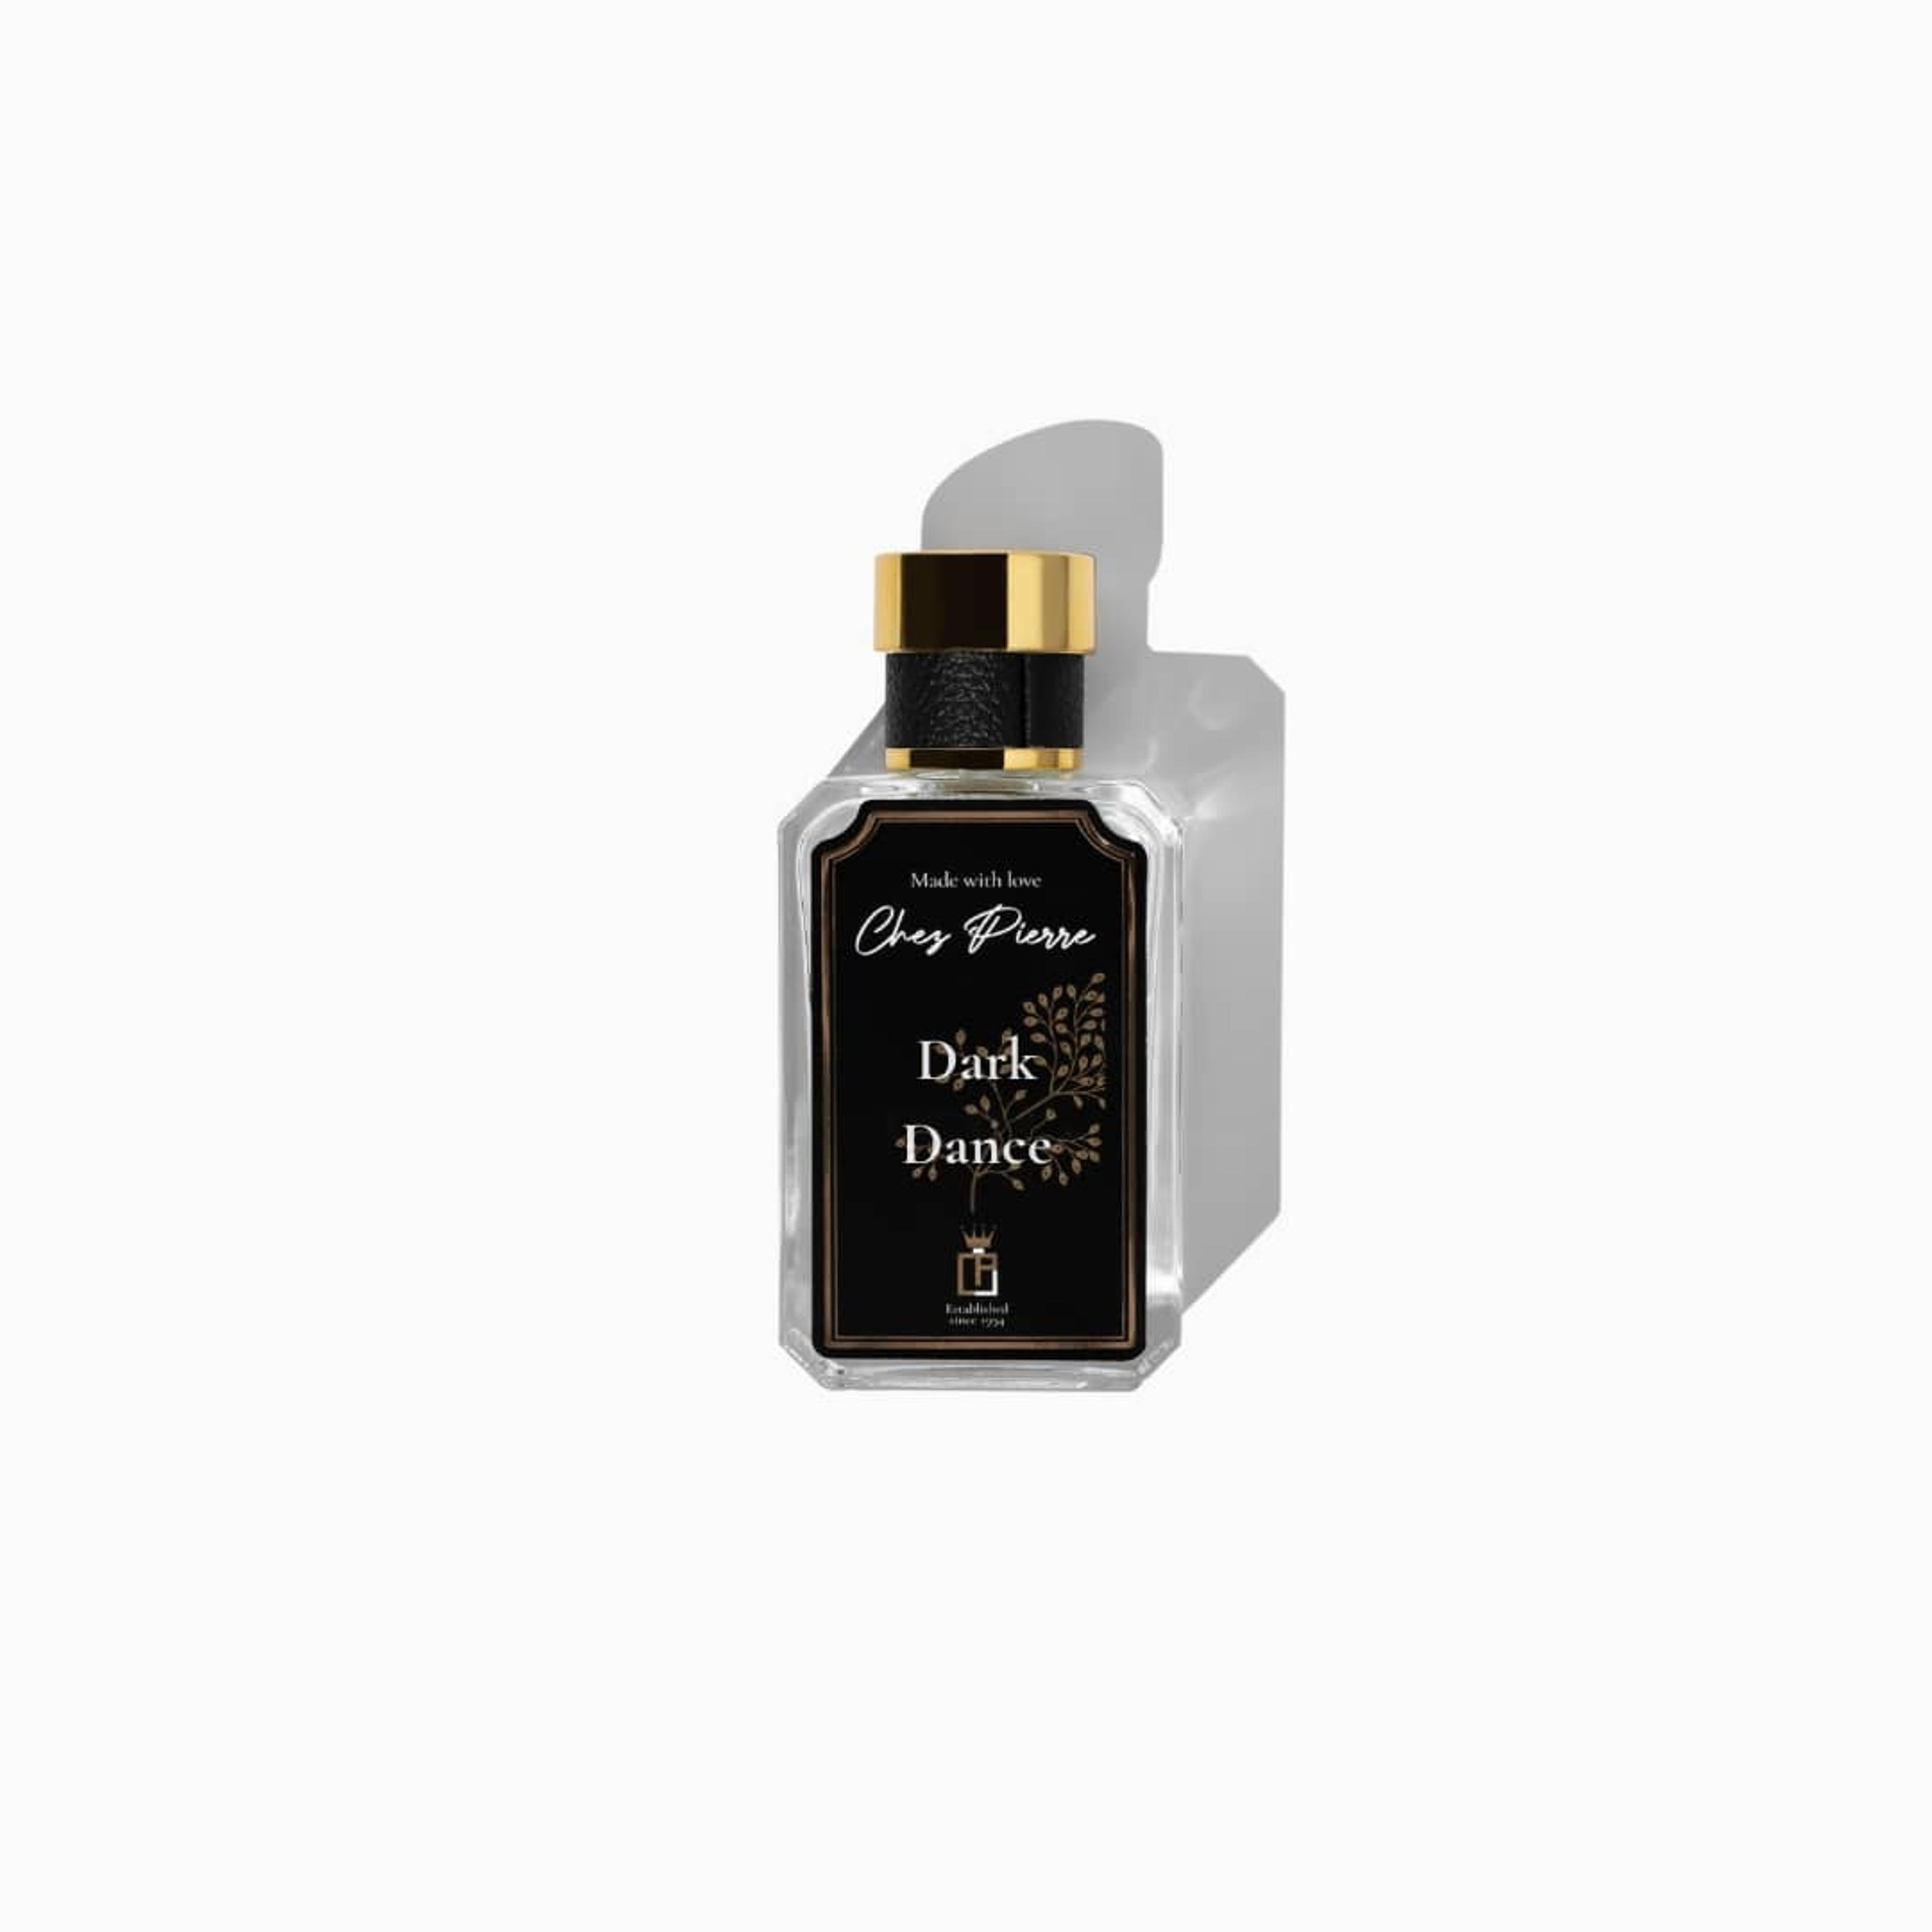 Chez Pierre's Dark Dance Perfume Inspired By Amyris Homme